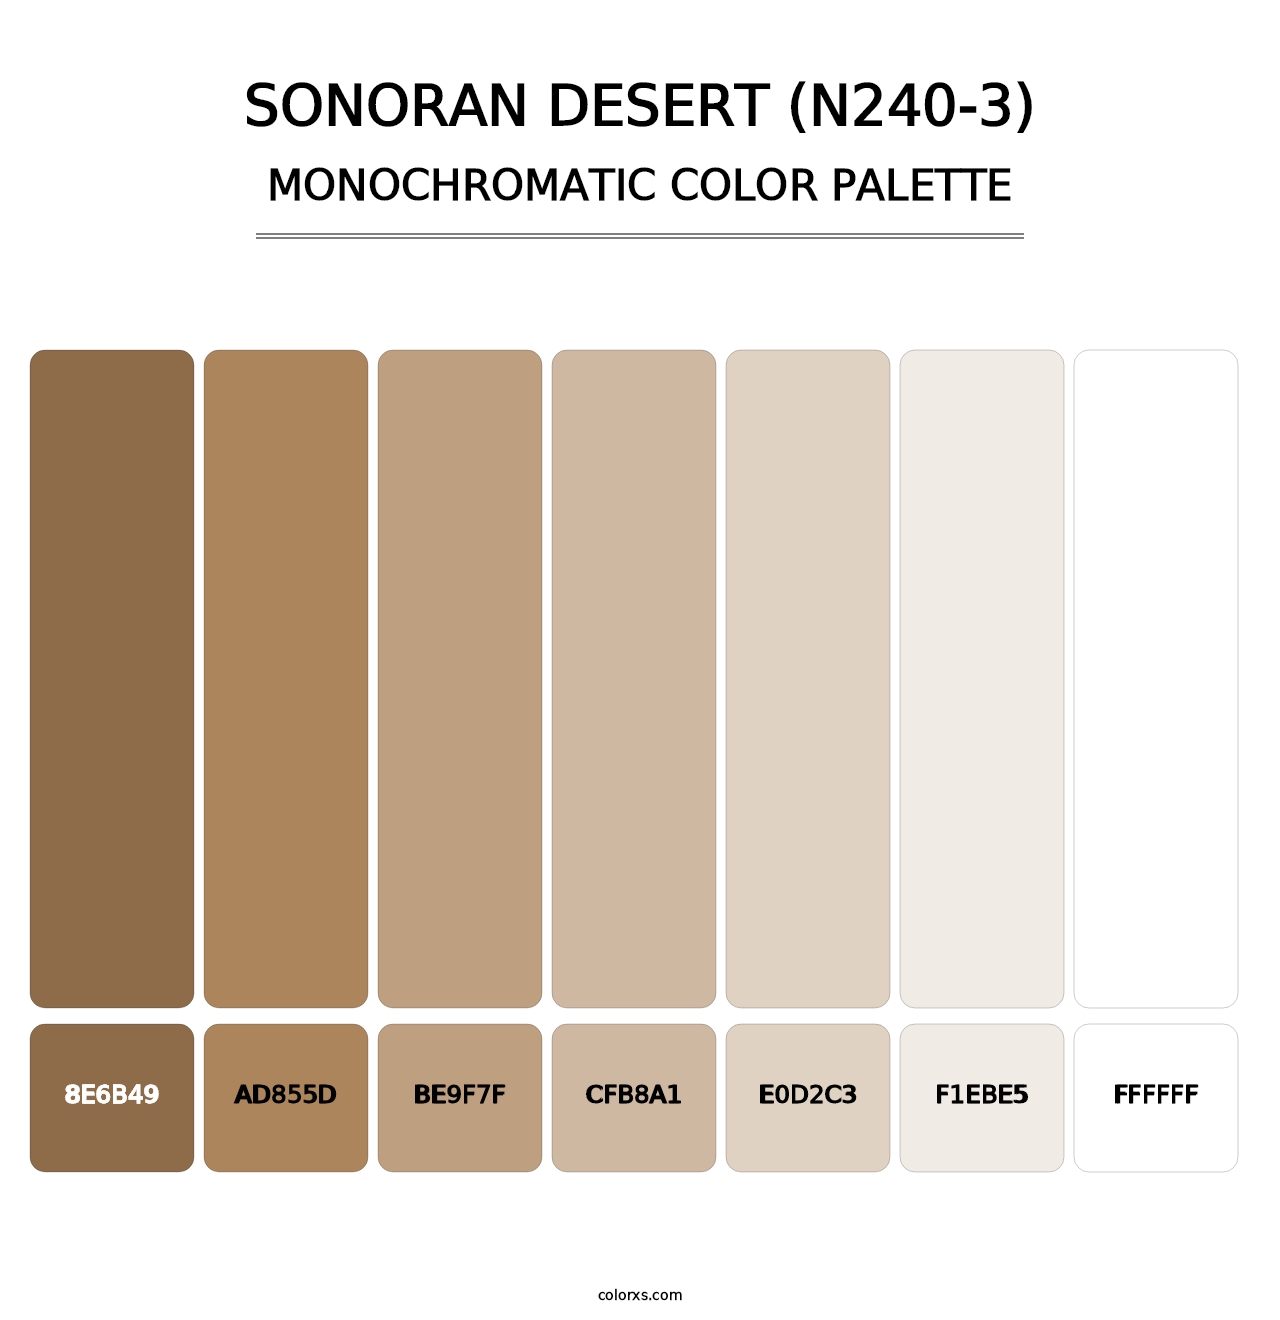 Sonoran Desert (N240-3) - Monochromatic Color Palette